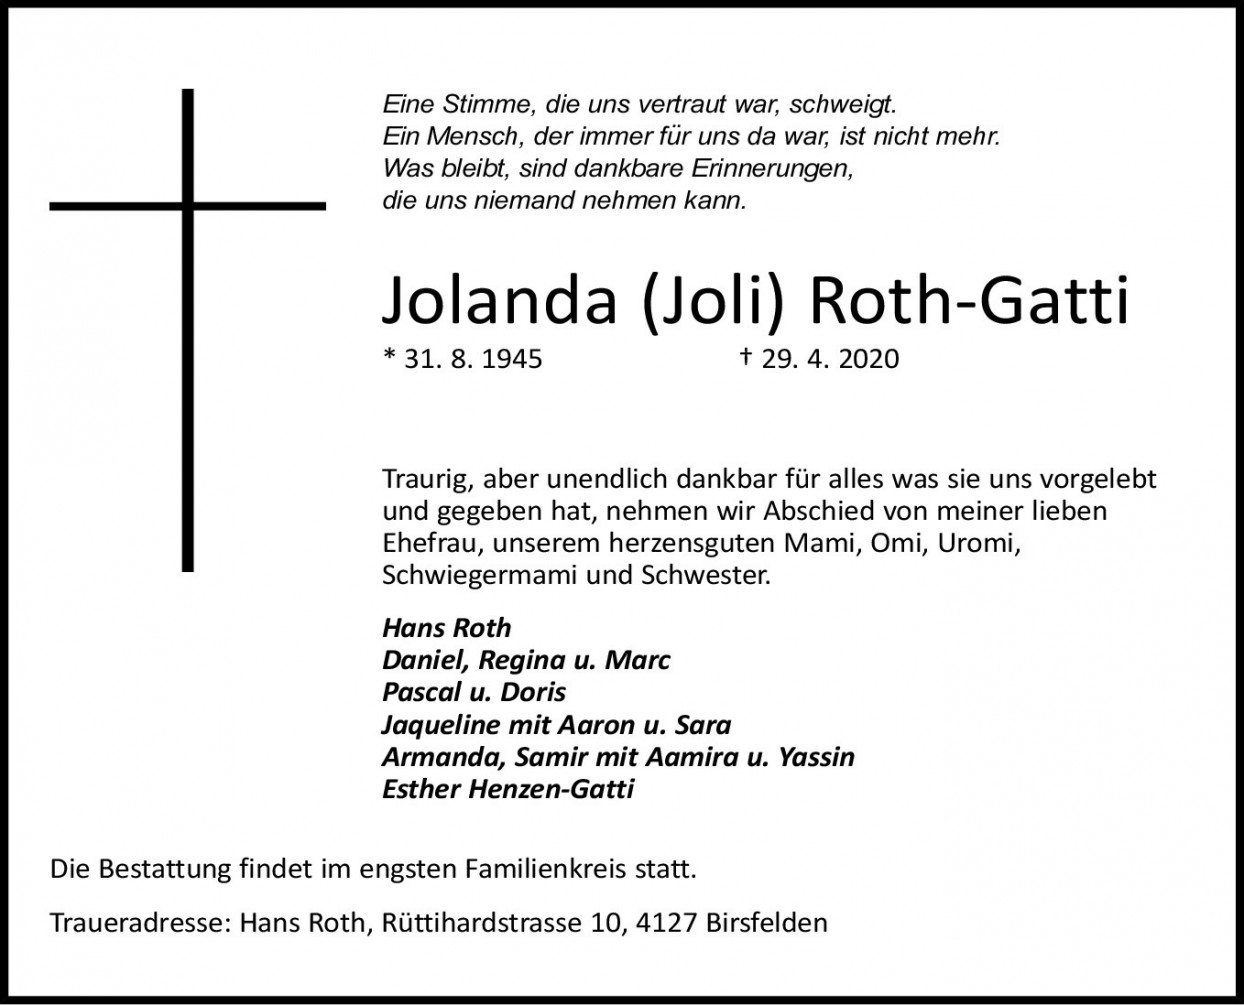 Jolanda Roth-Gatti